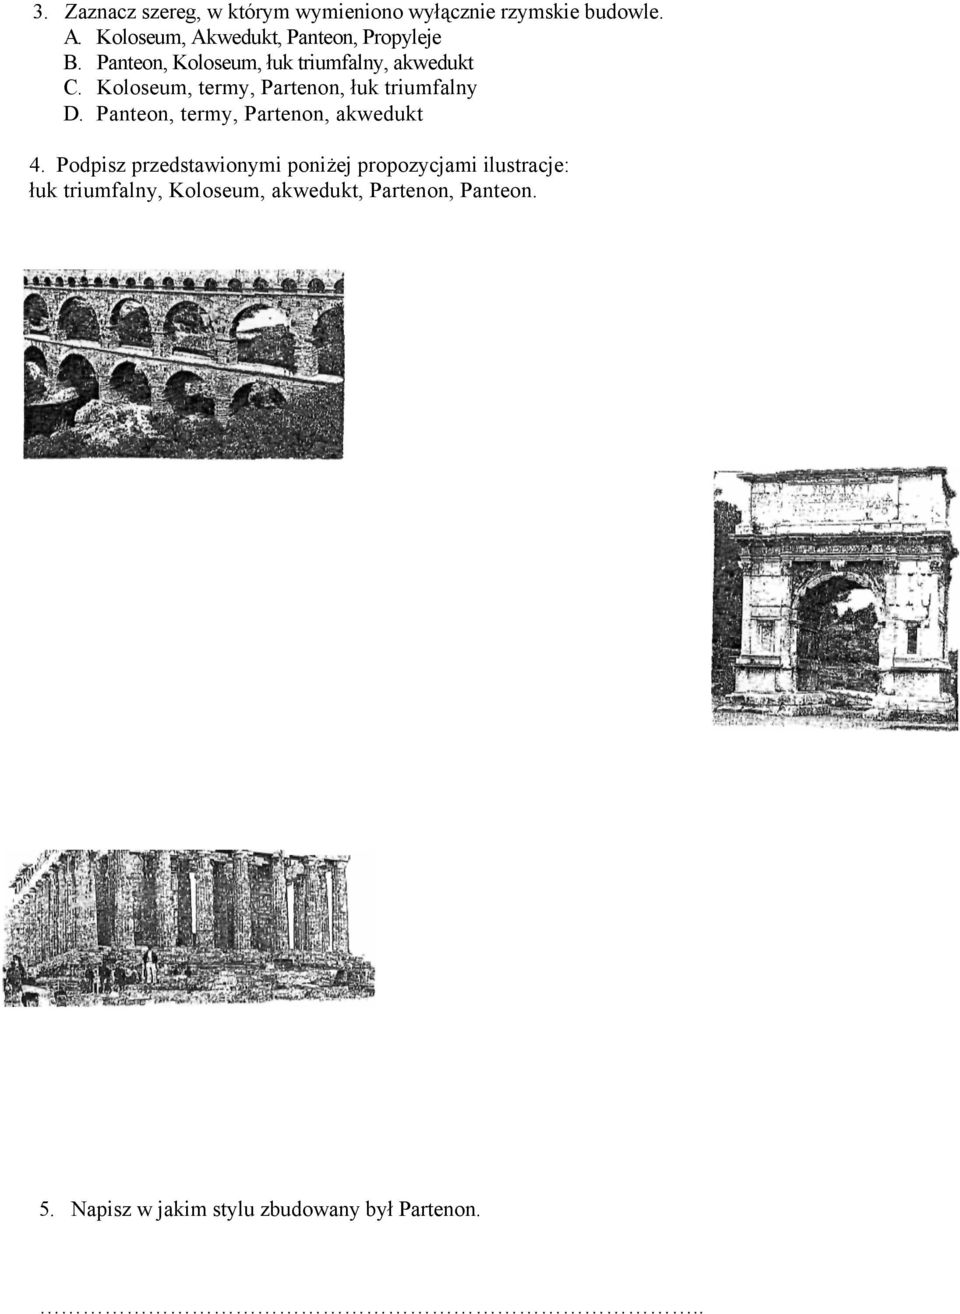 Koloseum, termy, Partenon, łuk triumfalny D. Panteon, termy, Partenon, akwedukt 4.